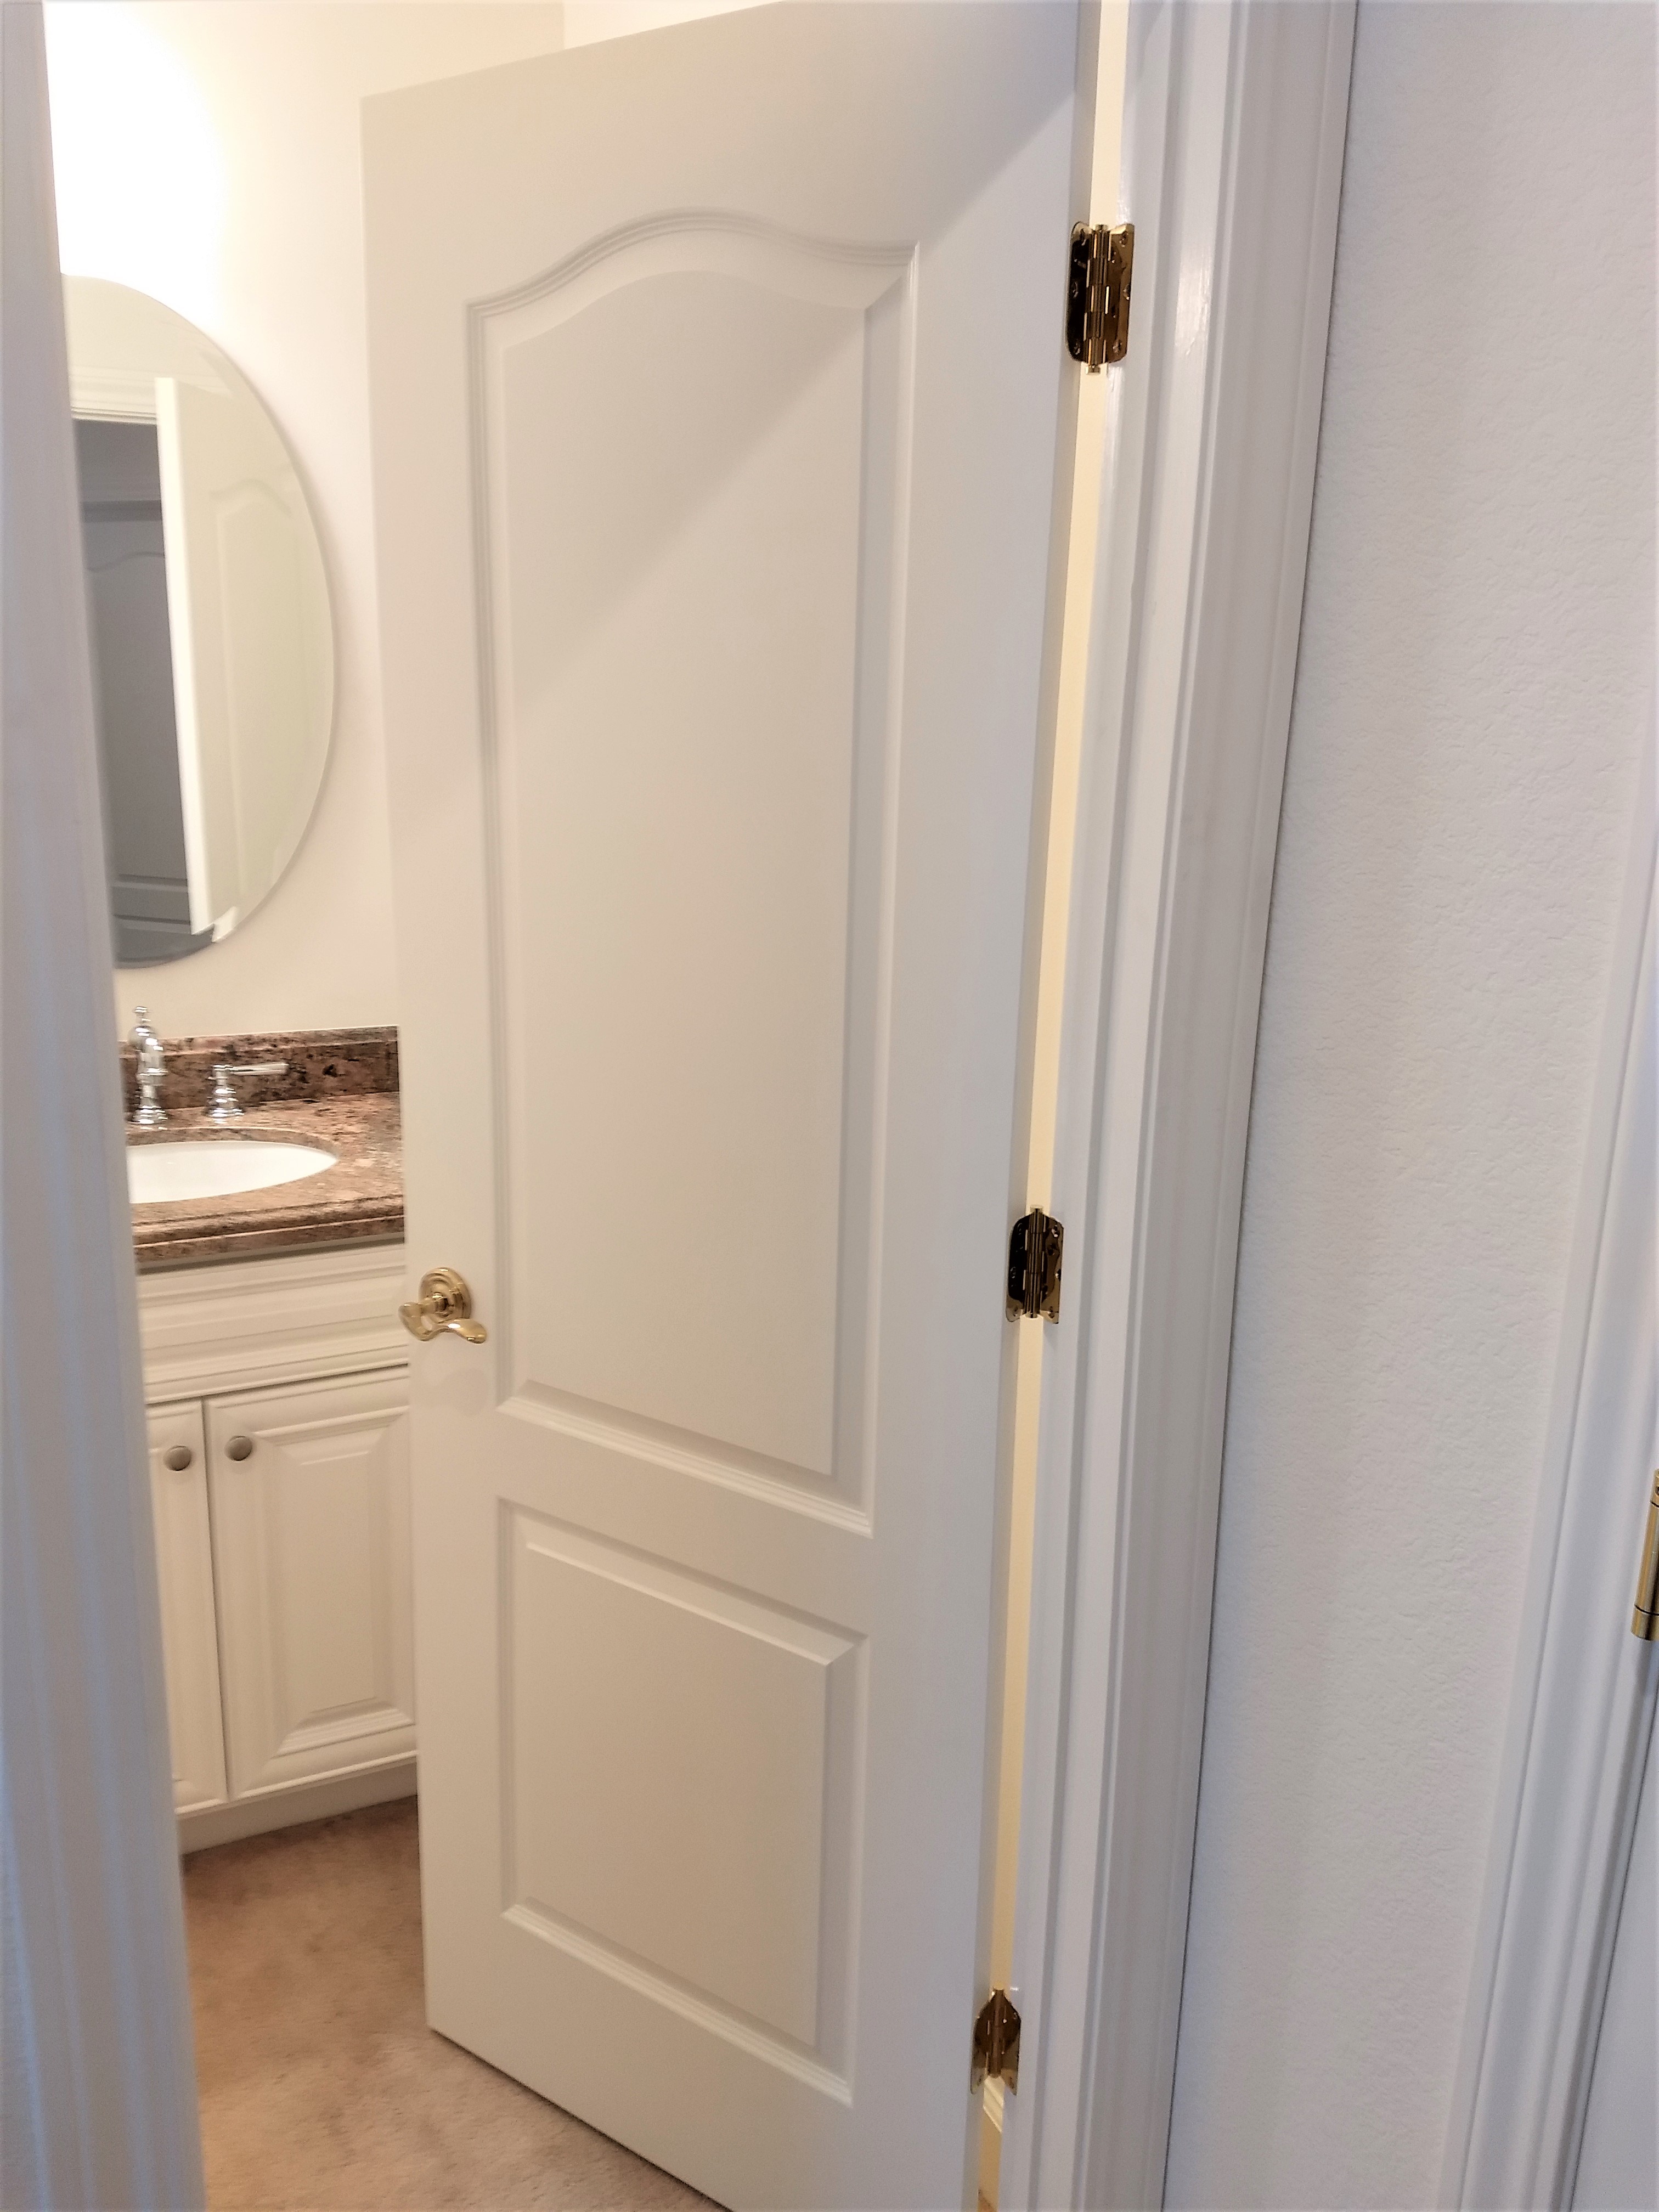 2pnl-princeton-style-interior-door-bathroom.jpg